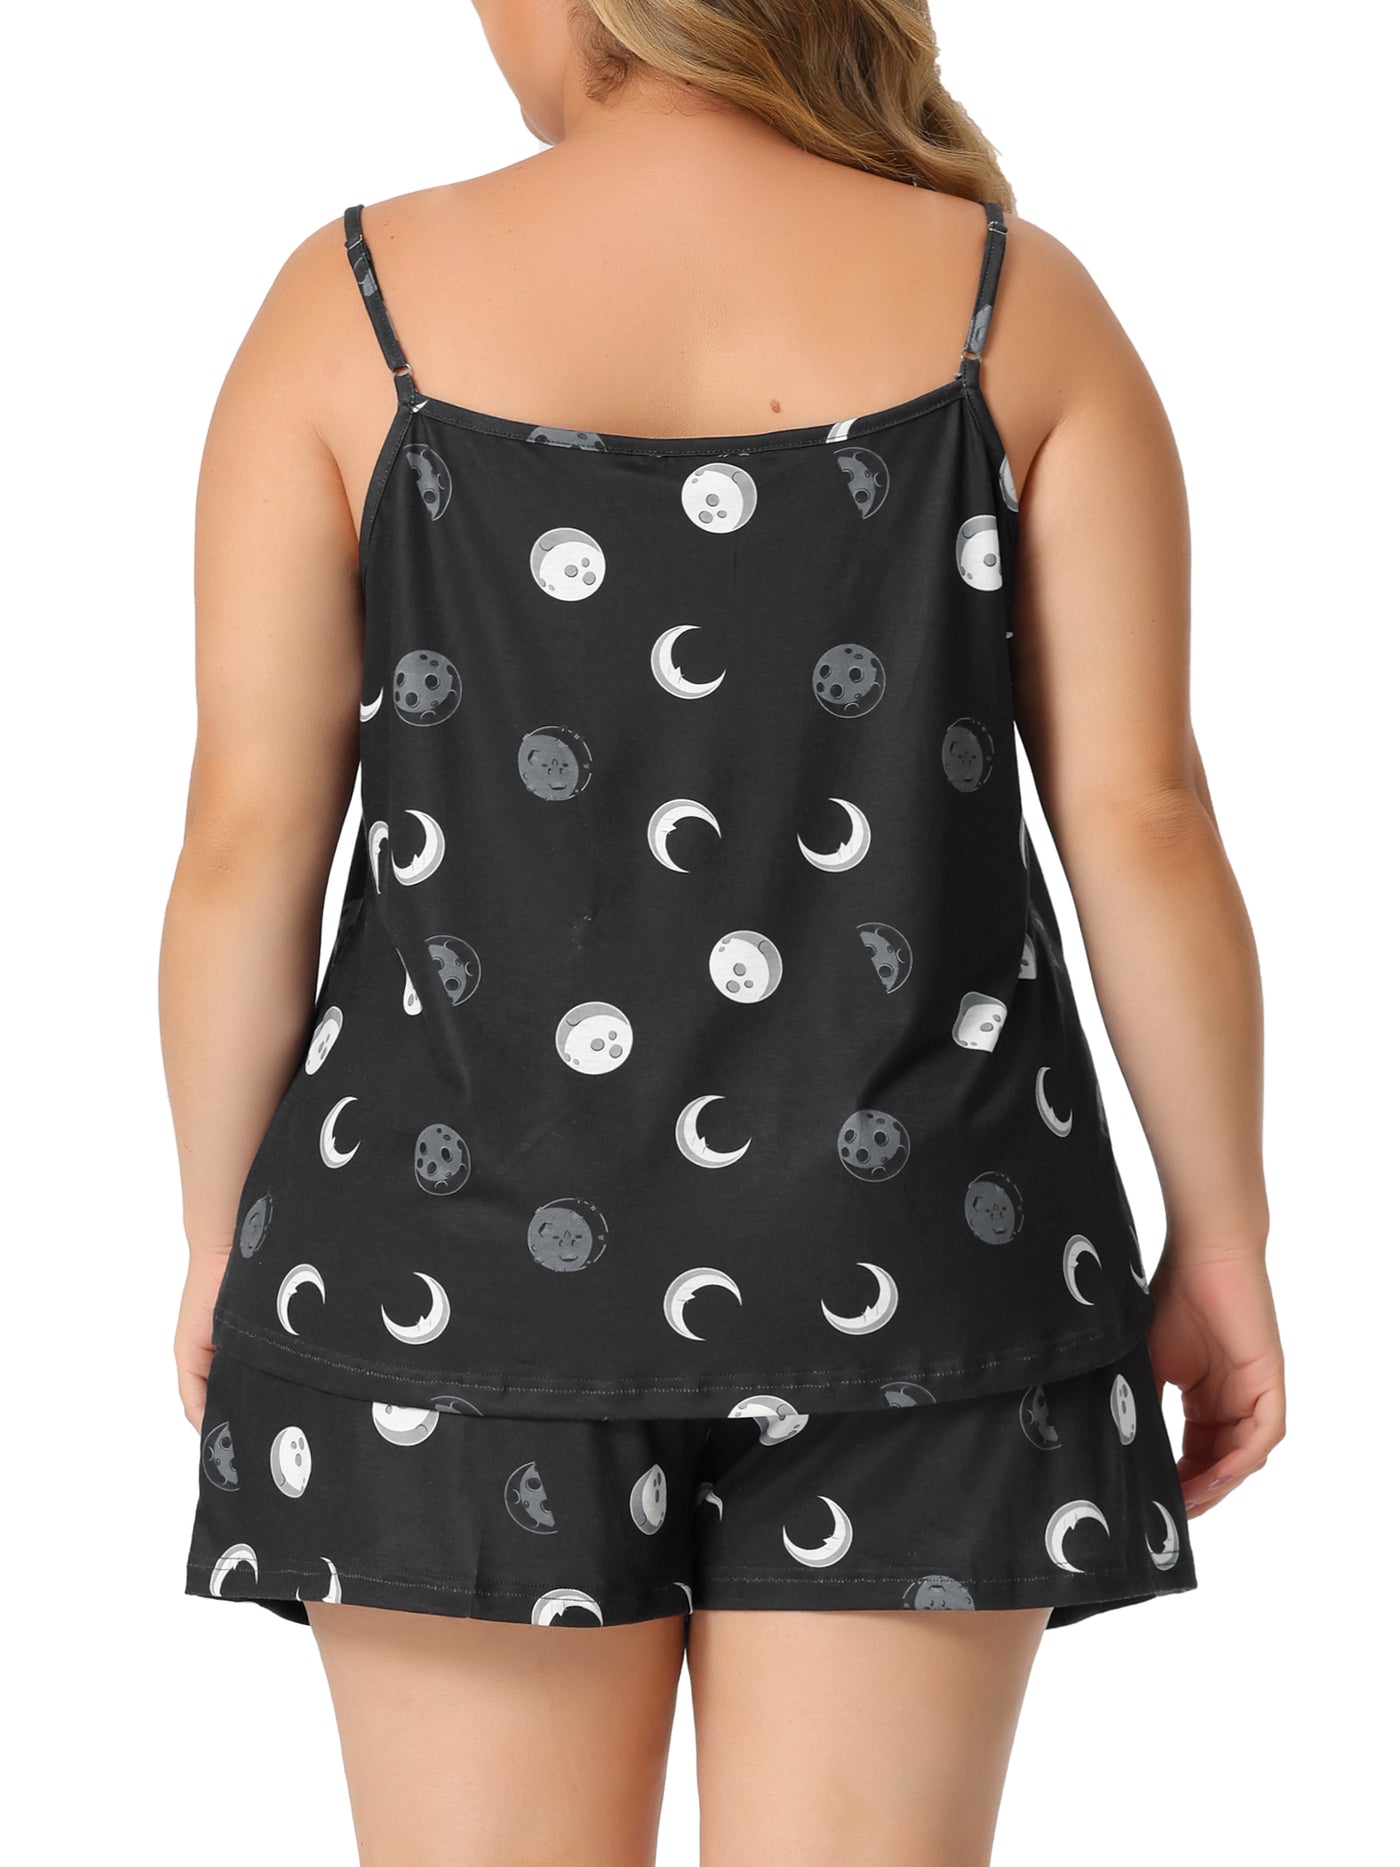 Bublédon Pajamas Set for Women Plus Size Cami Cherry Printed Elastic Waist Shorts Nightgown Loungewear